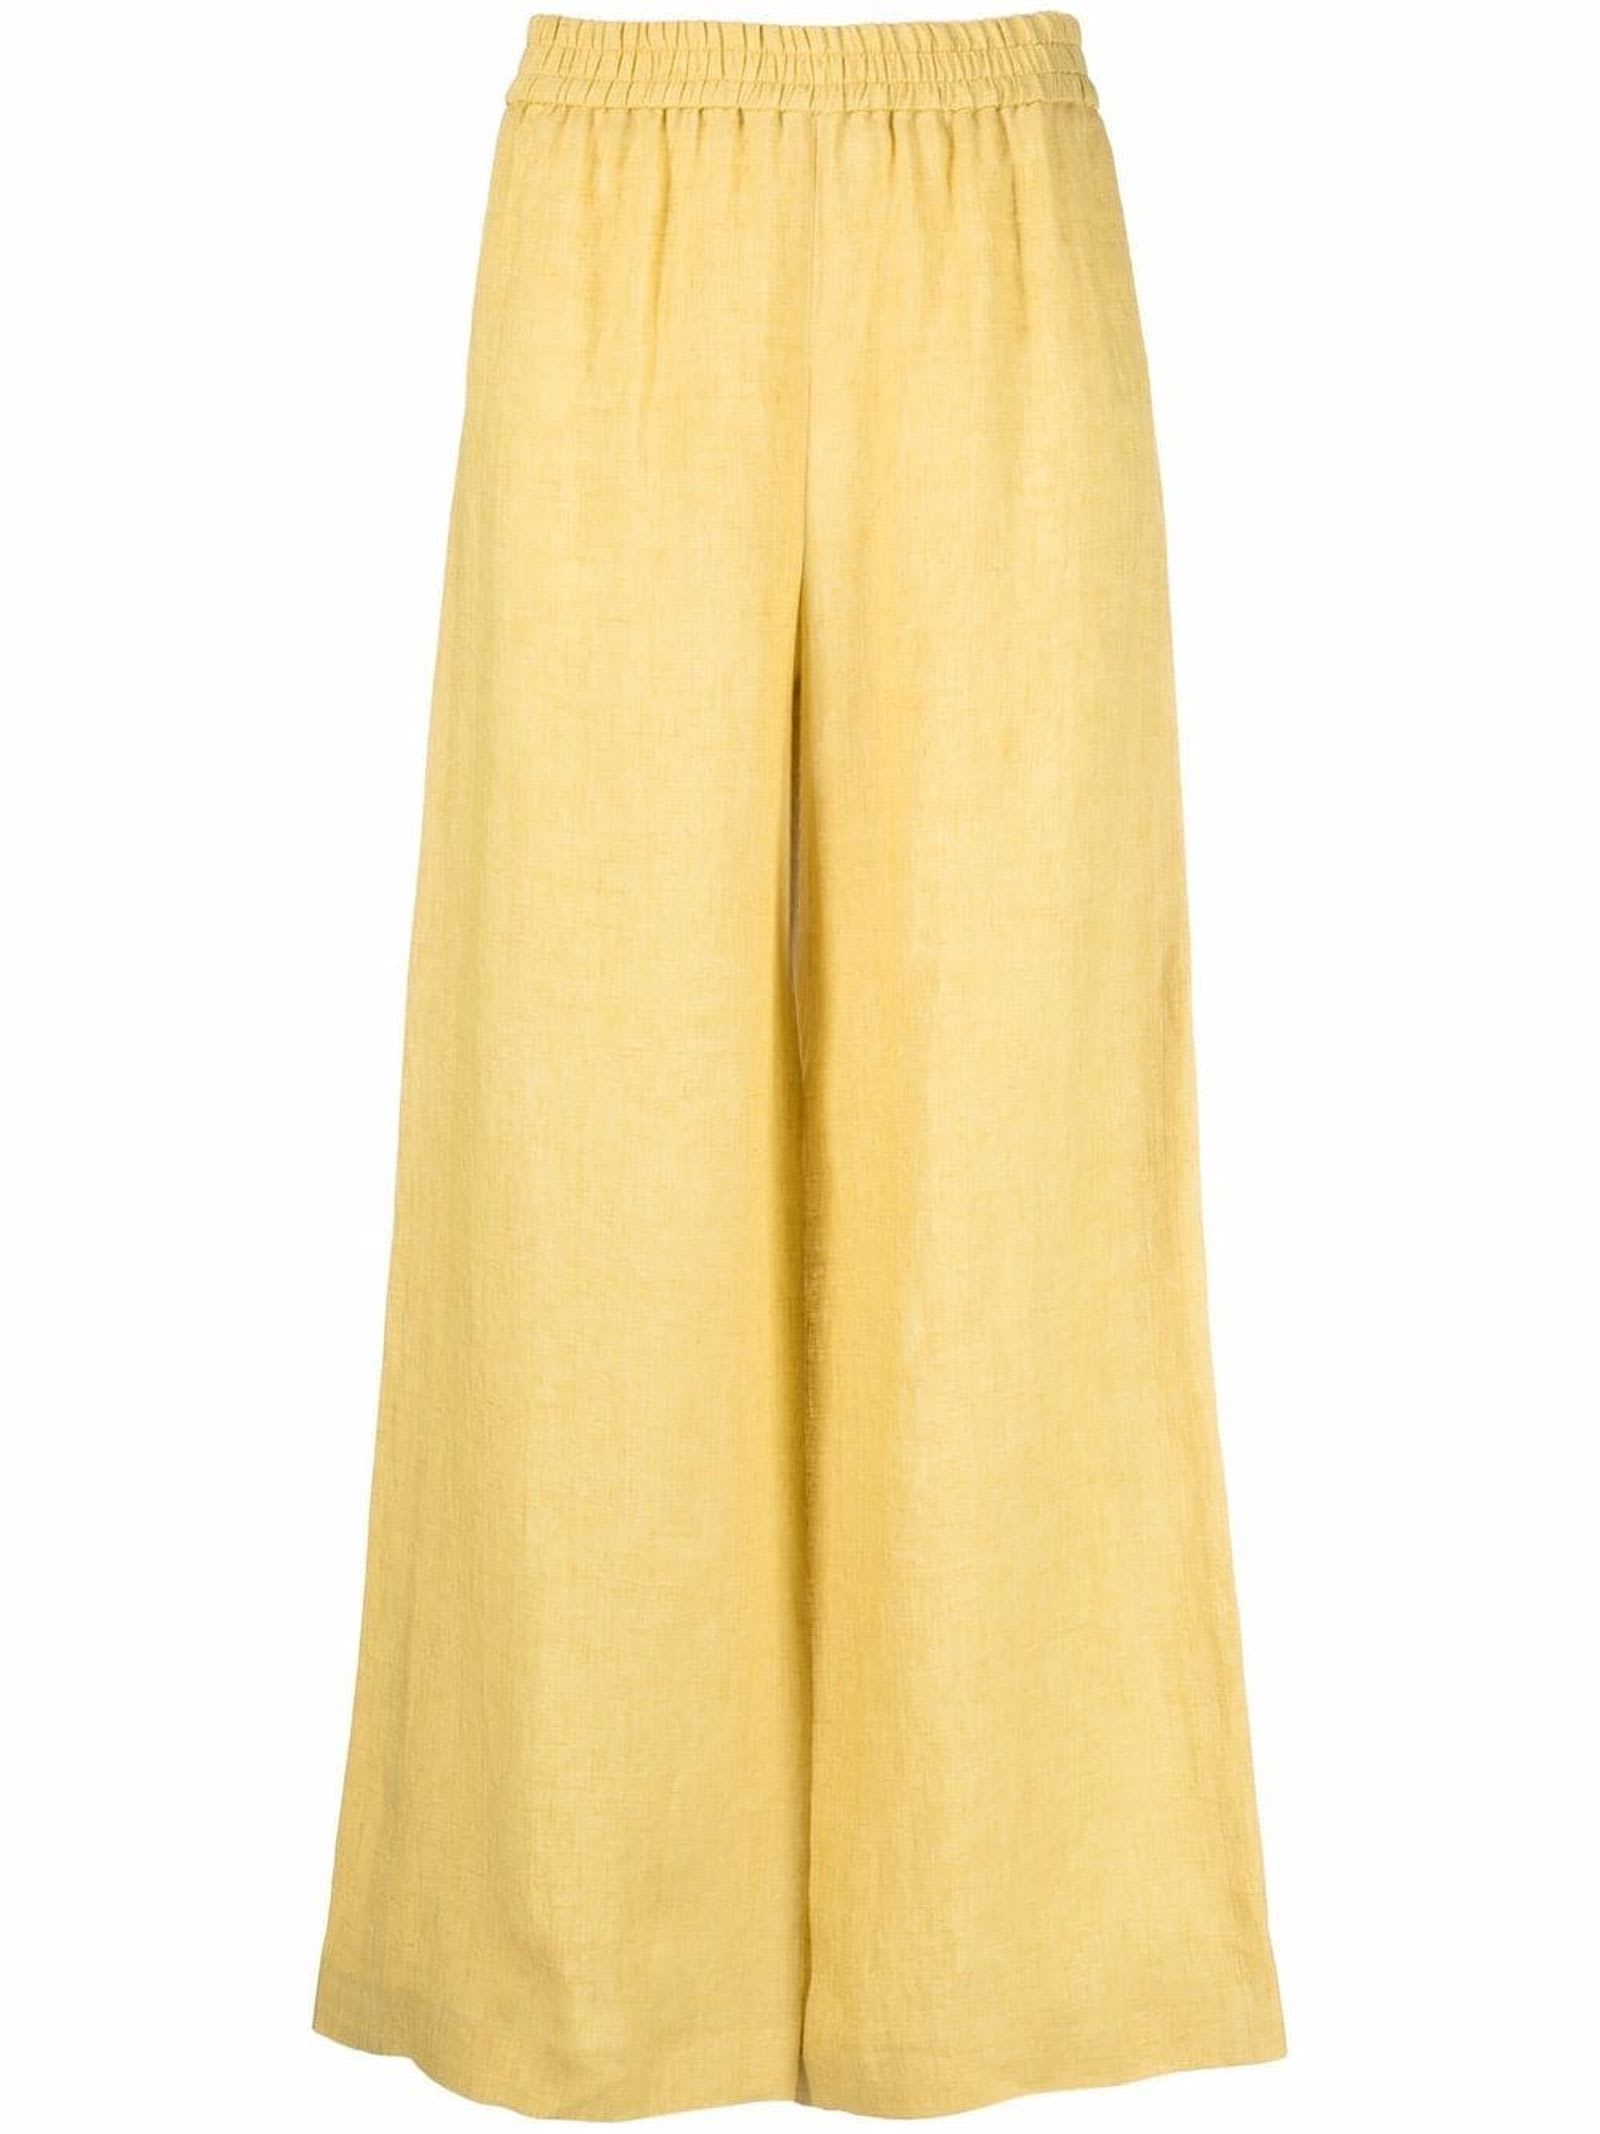 Fabiana Filippi Yellow Linen Trousers